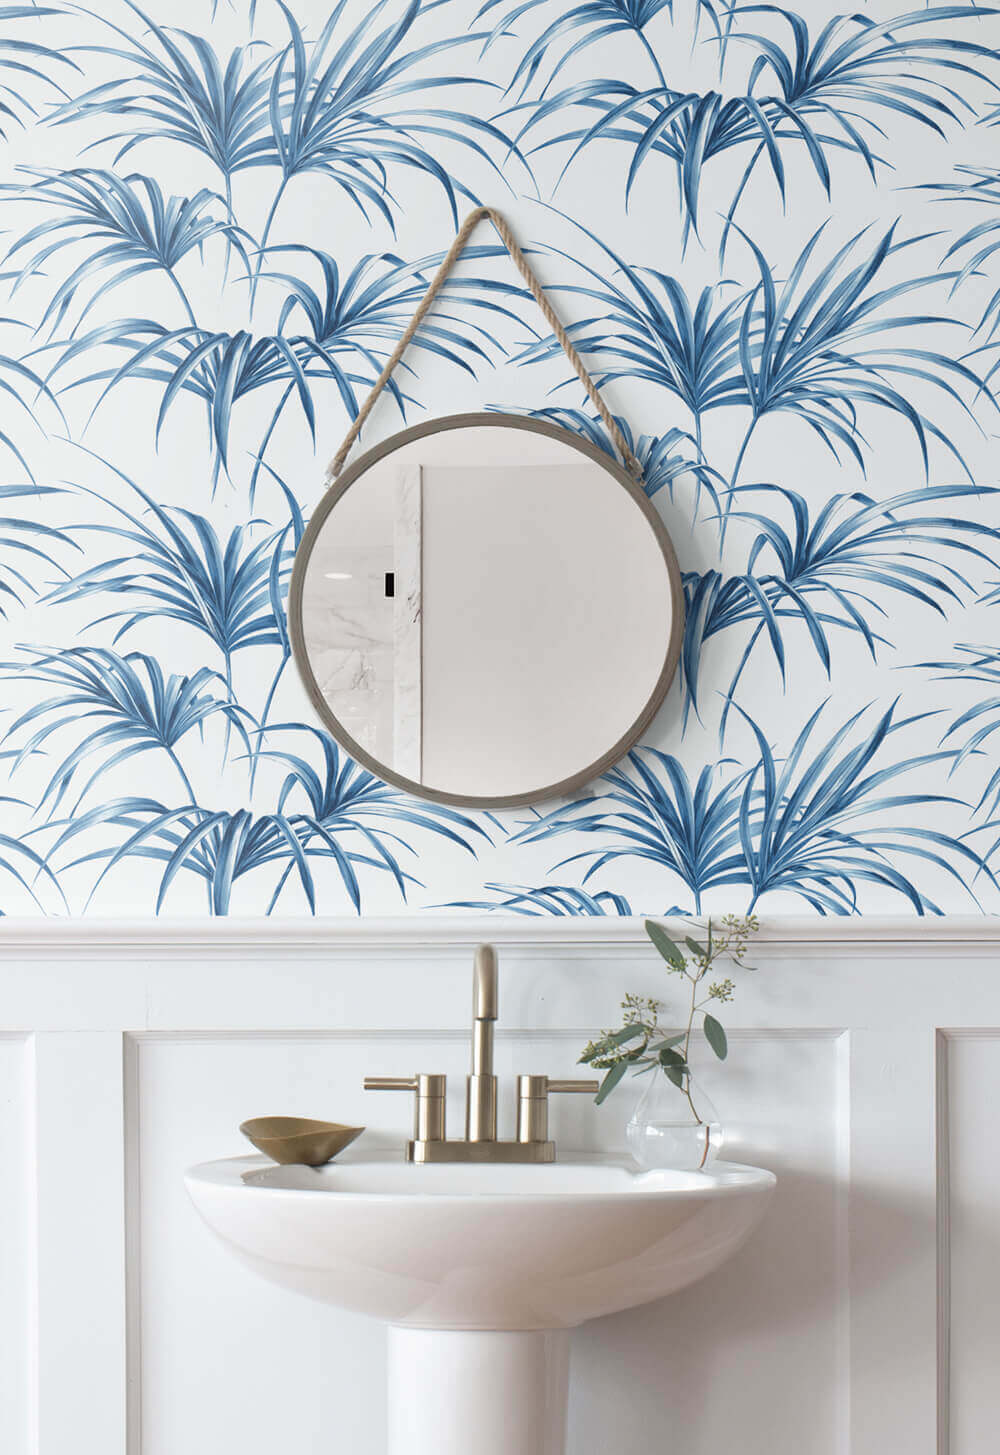 NextWall Tropical Palm Leaf Peel & Stick Wallpaper - Blue